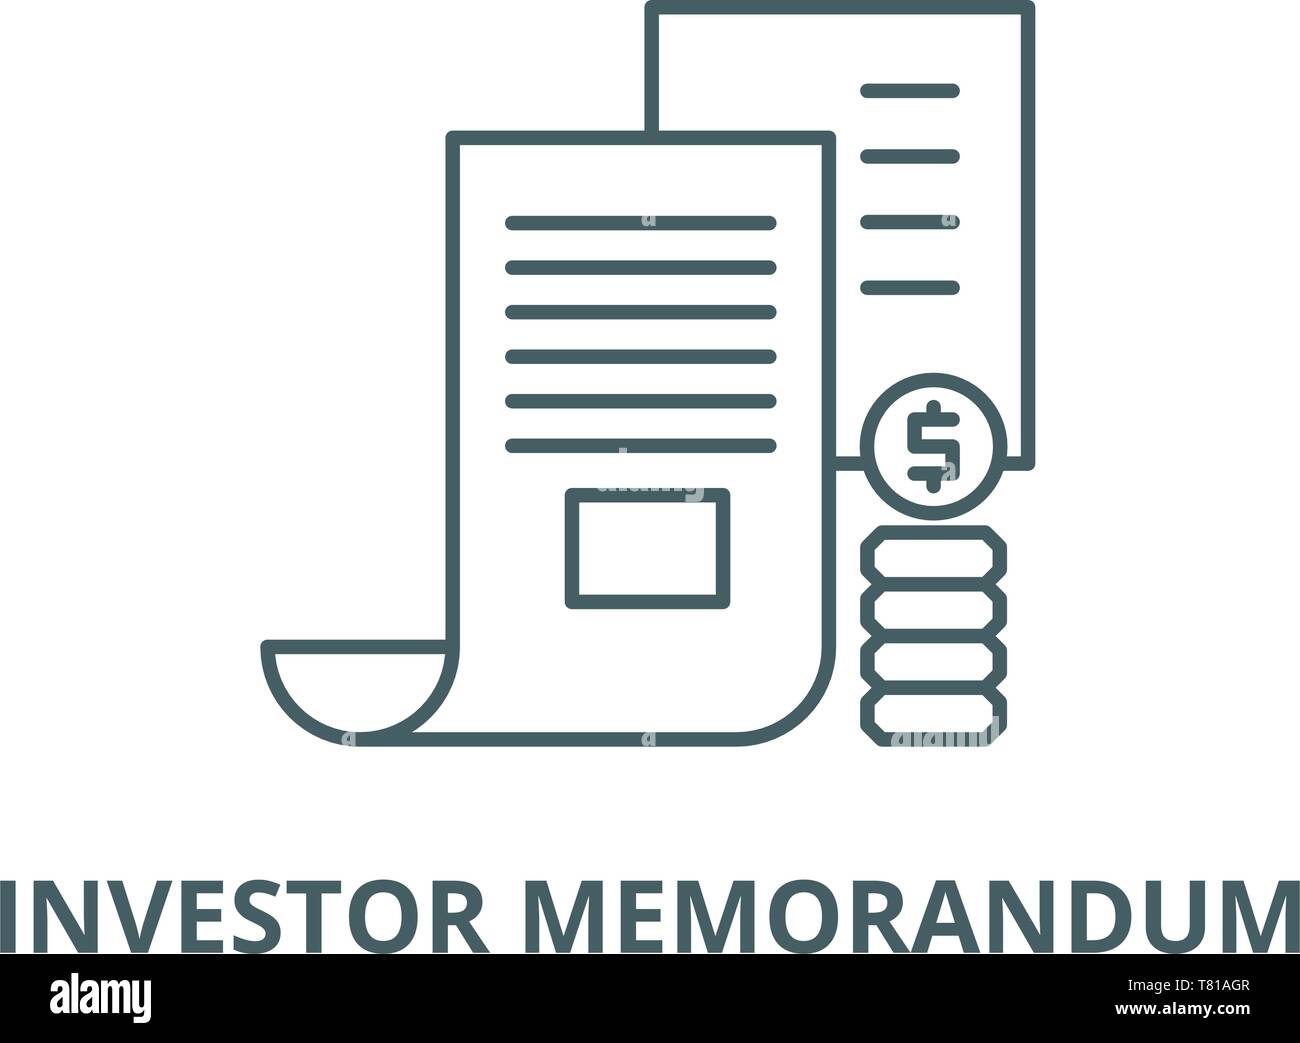 Investor memorandum vector line icon, linear concept, outline sign, symbol Stock Vector